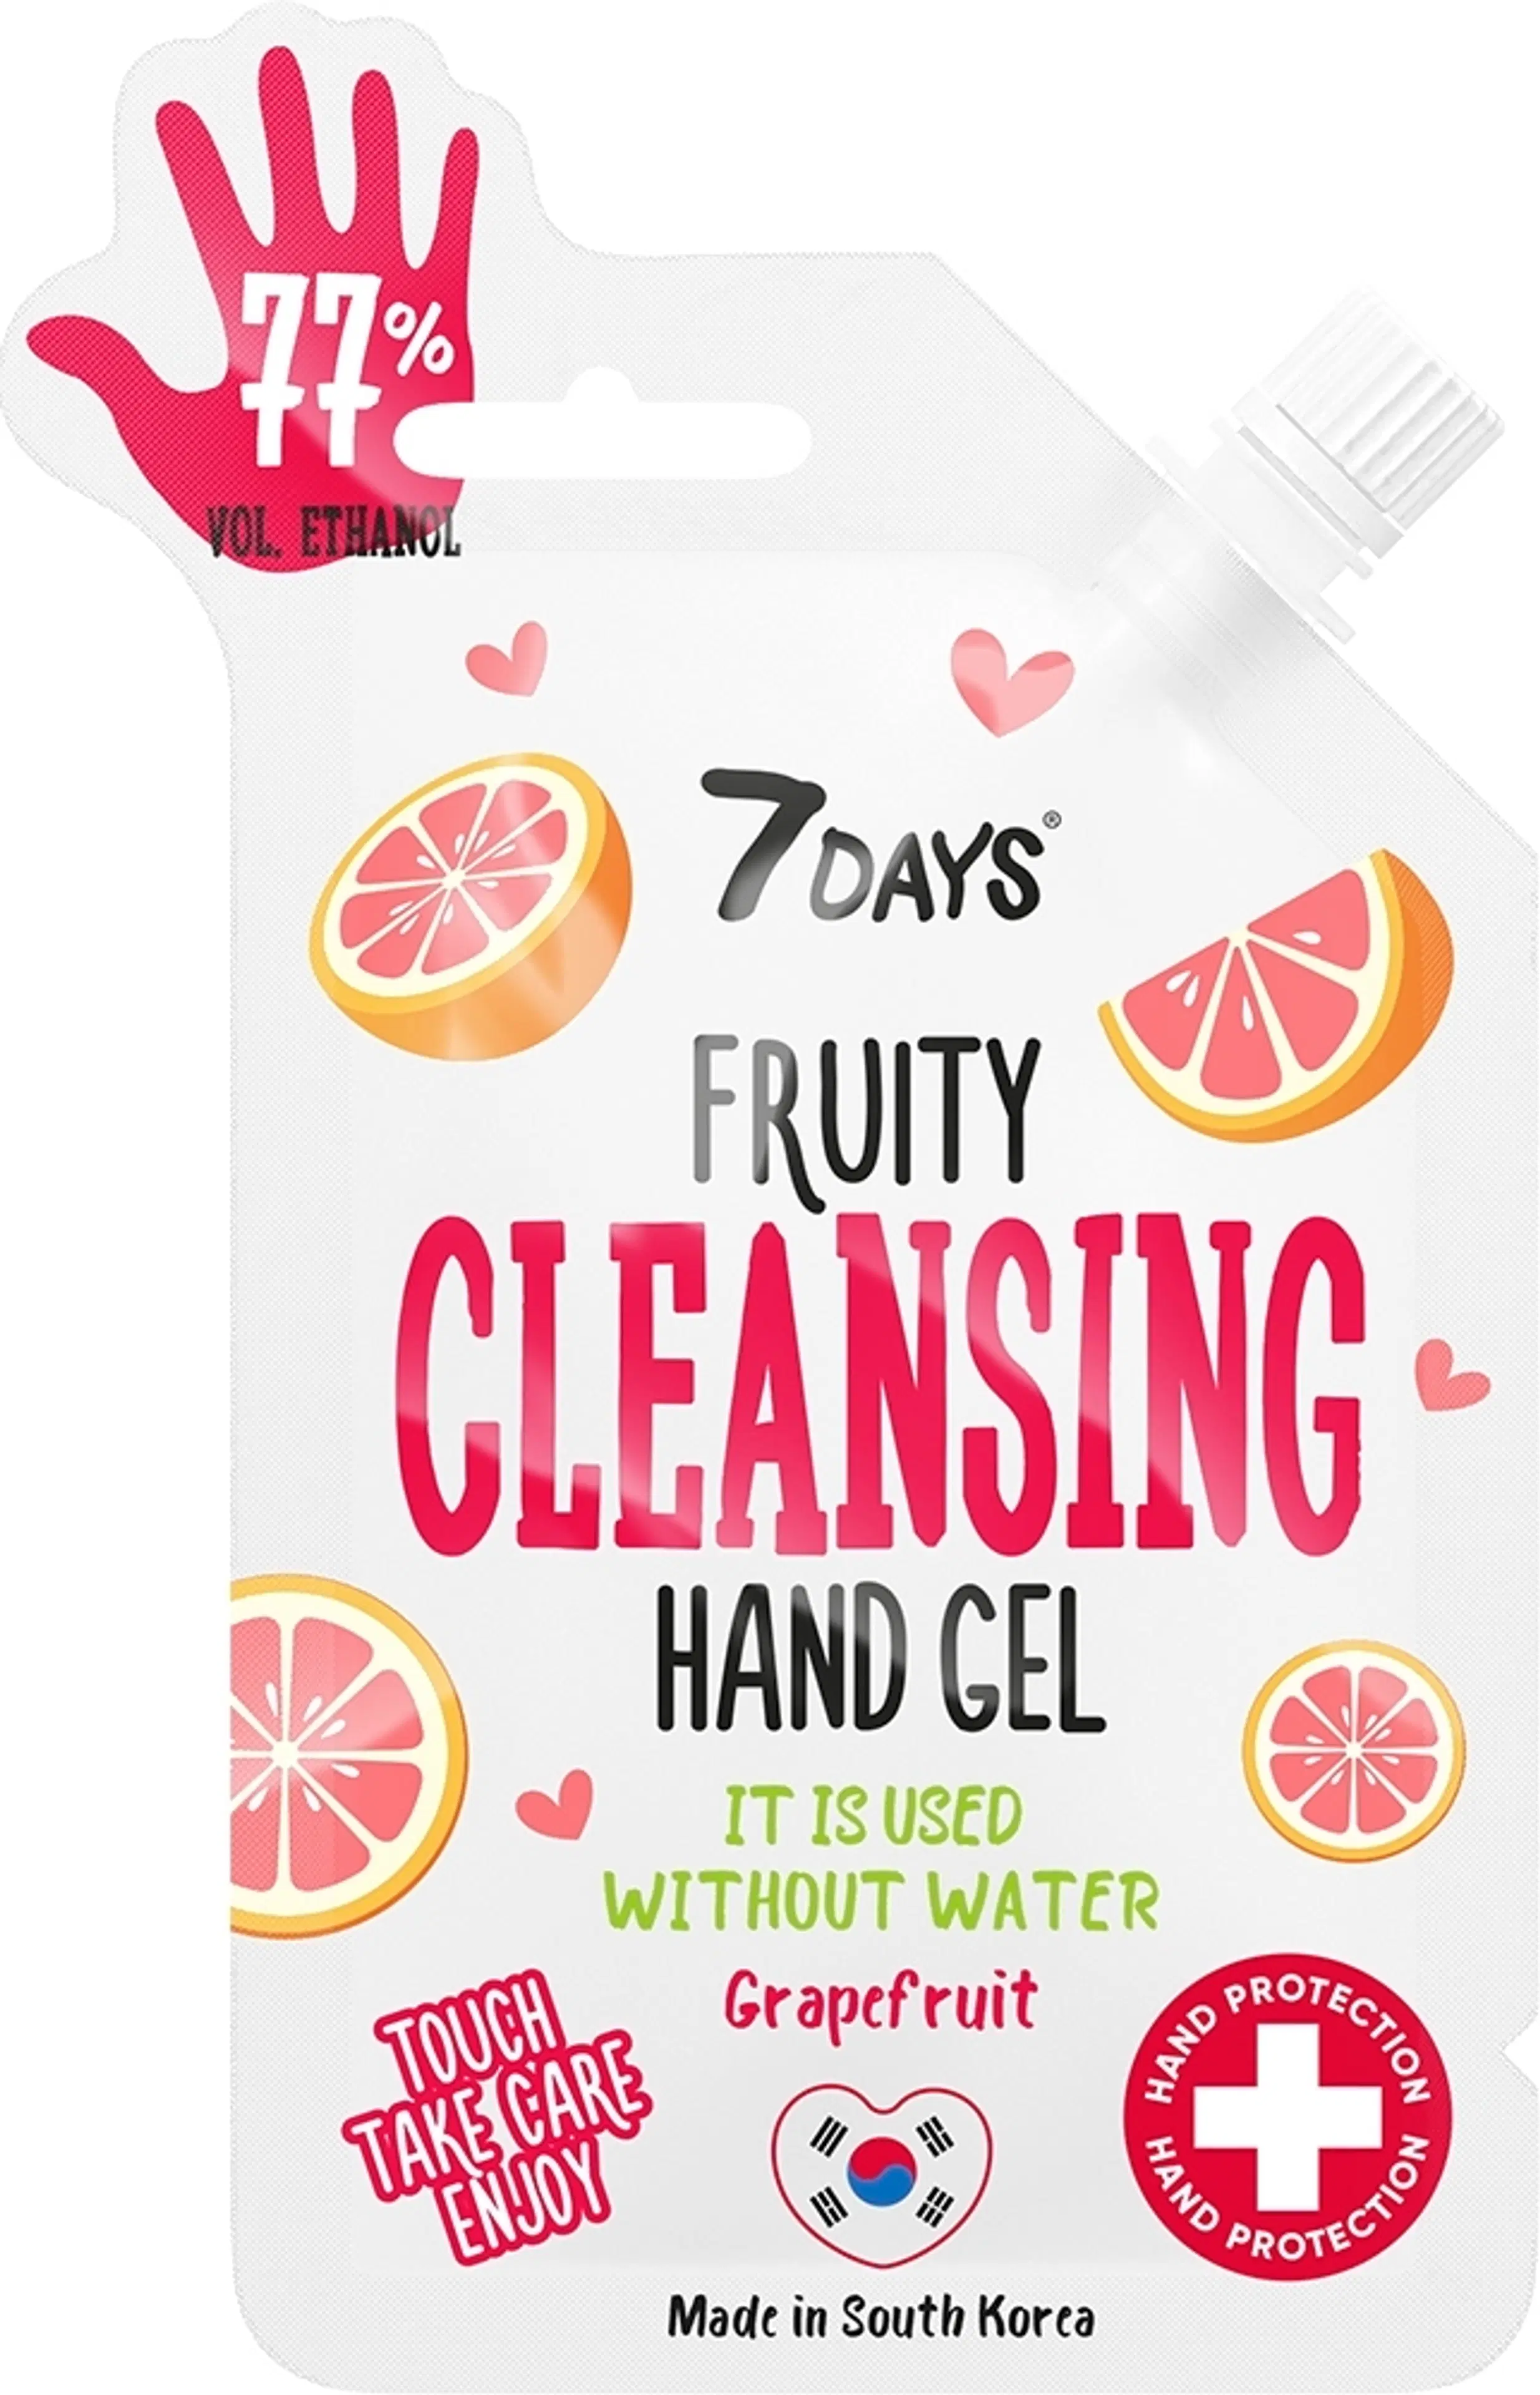 7DAYS HAND GEL grapfruit flavor, 25ml